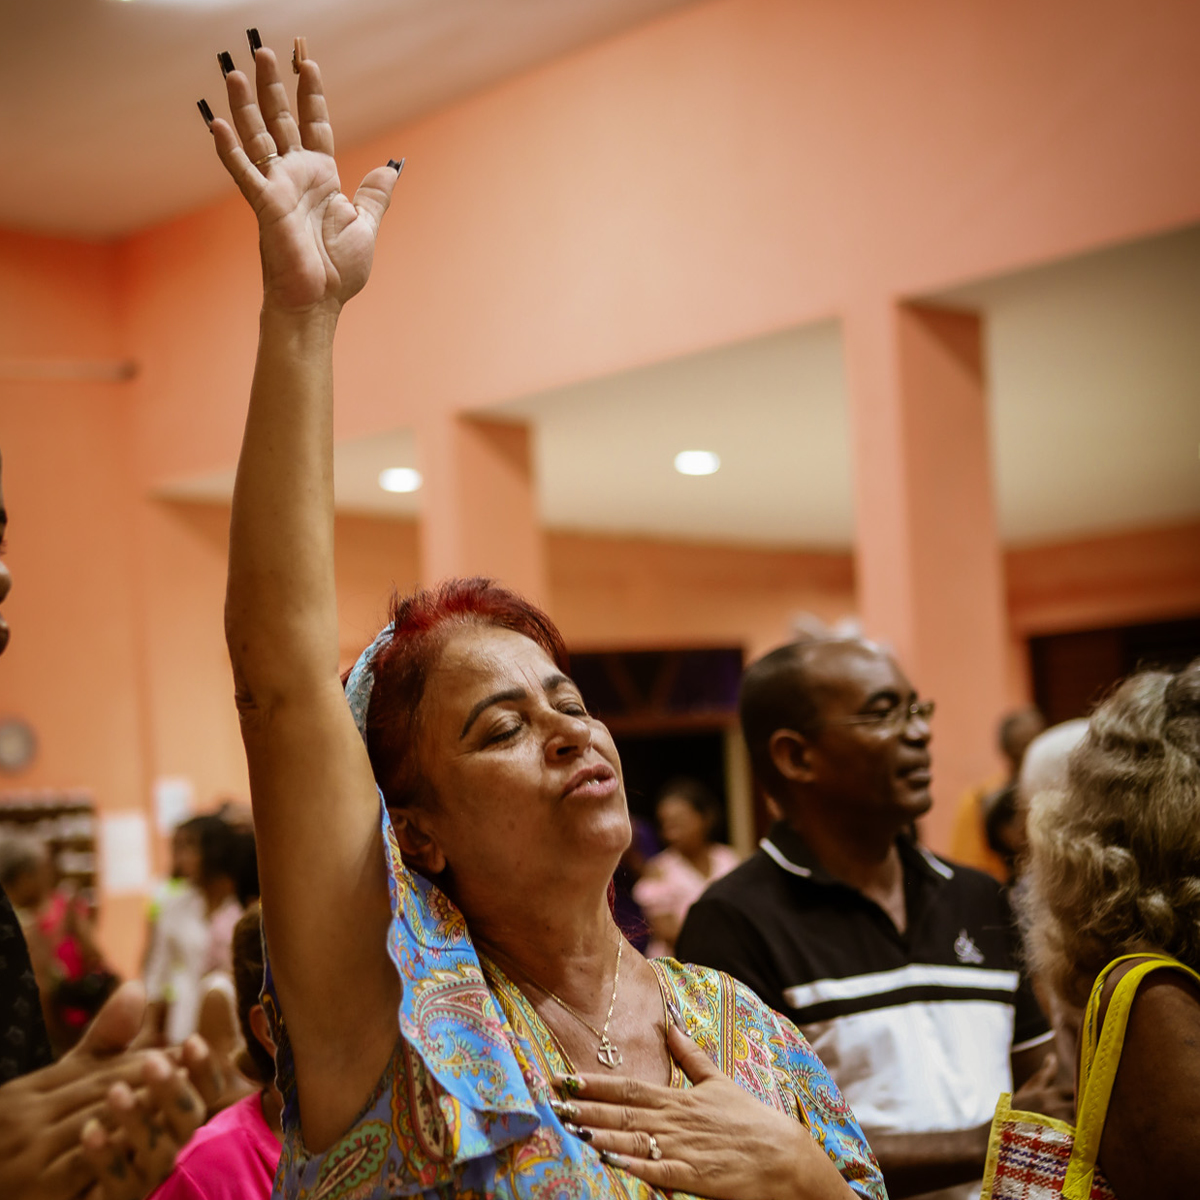 Cuban woman accepts Christ